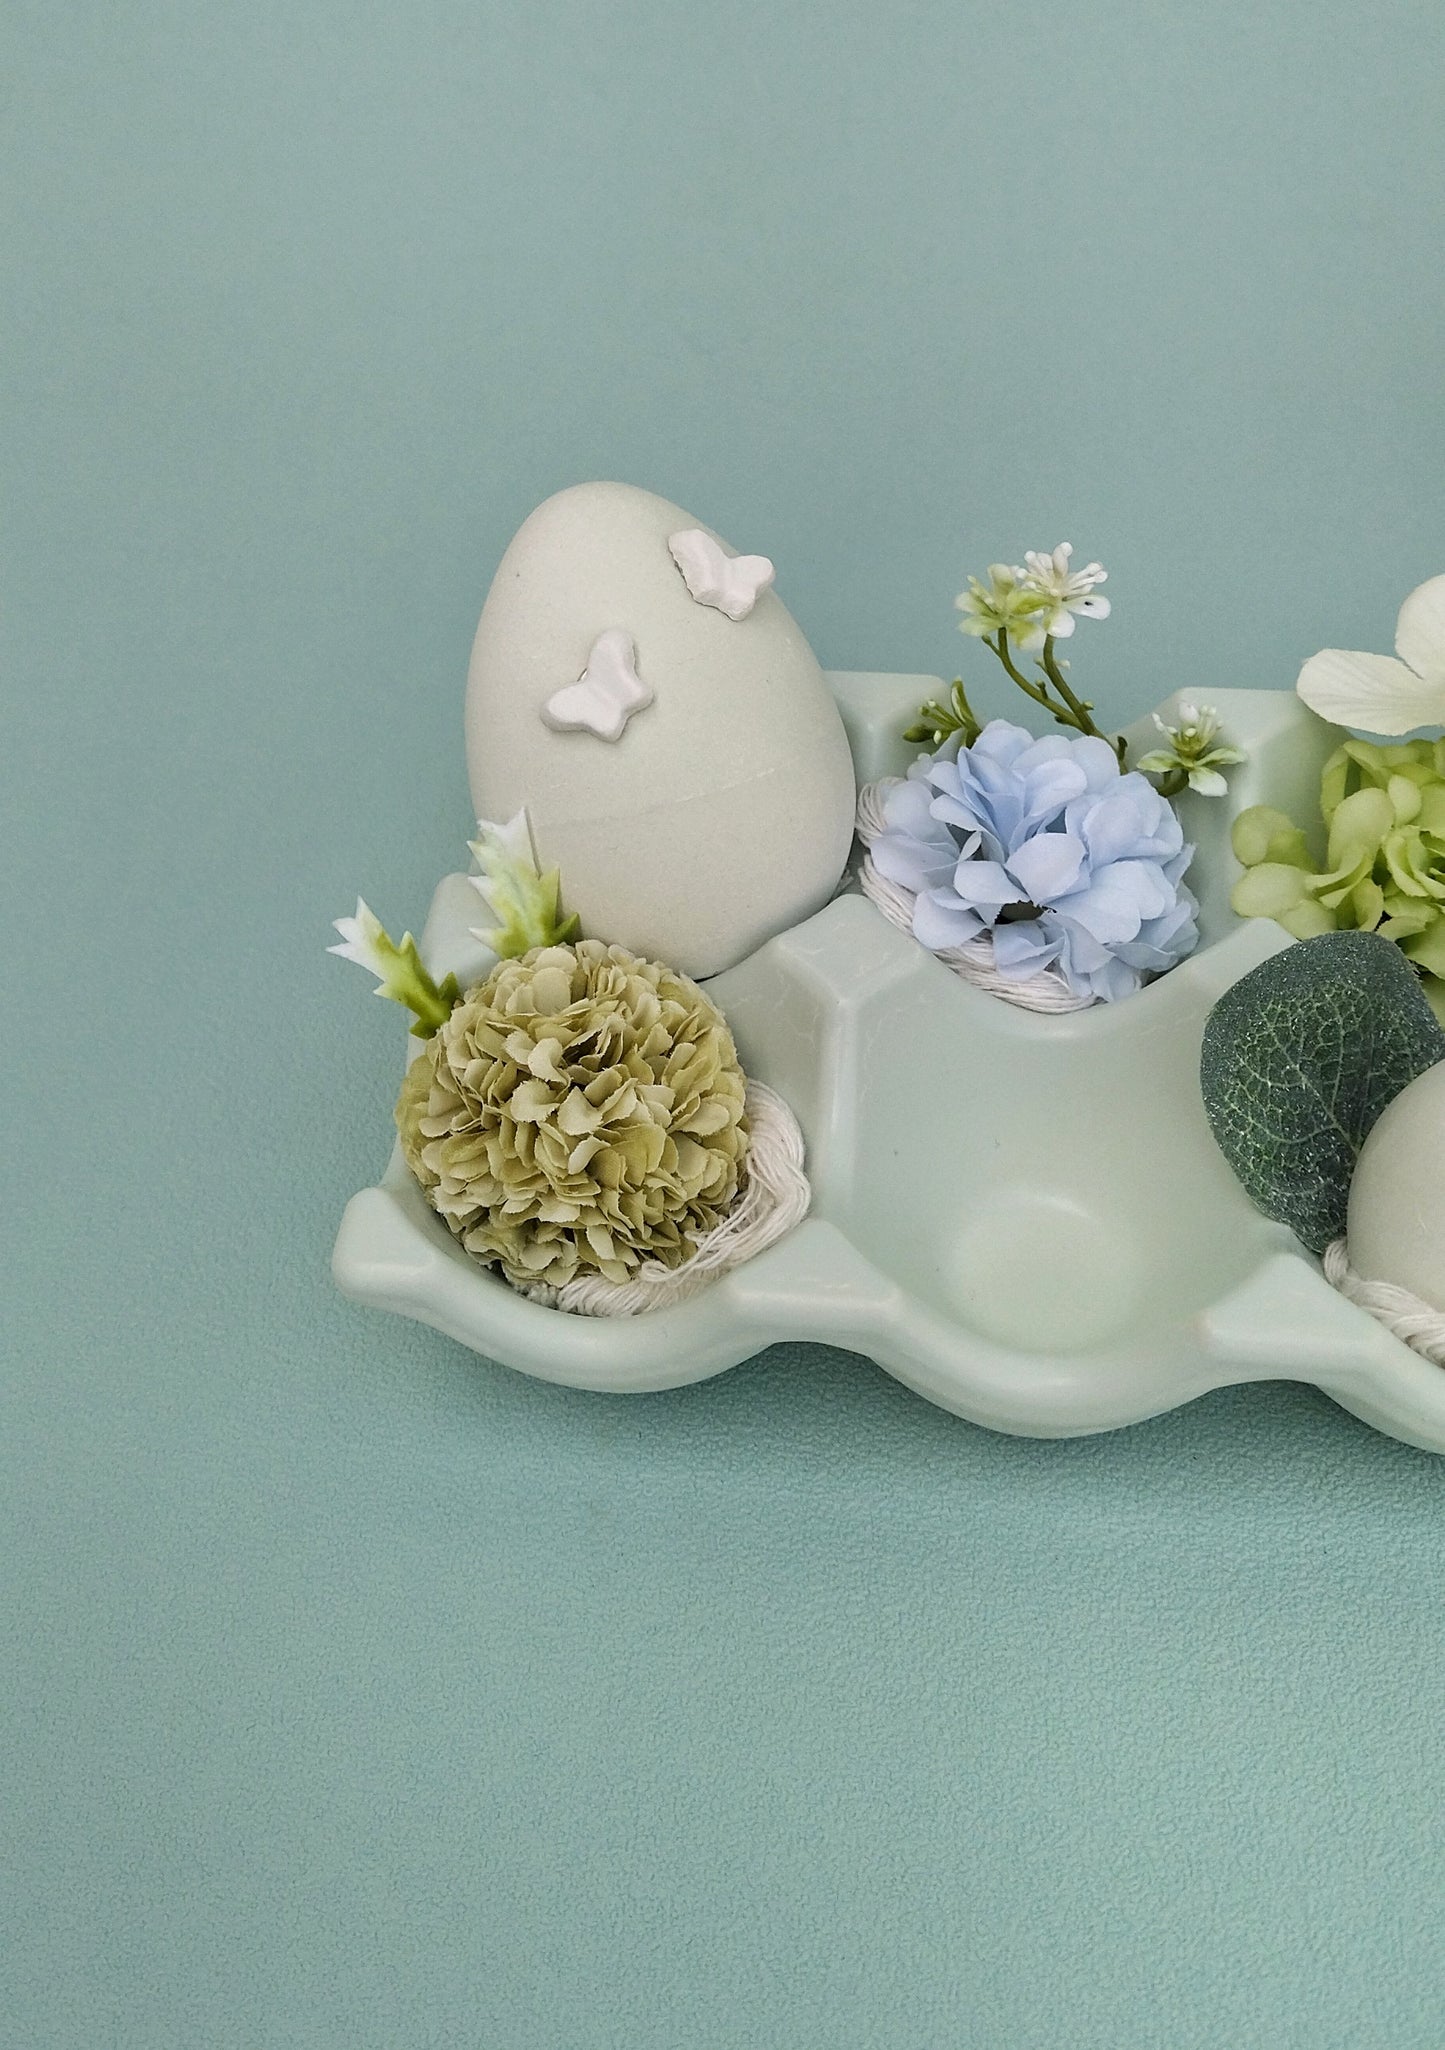 Ceramic Egg Carton, Easter Egg Cup